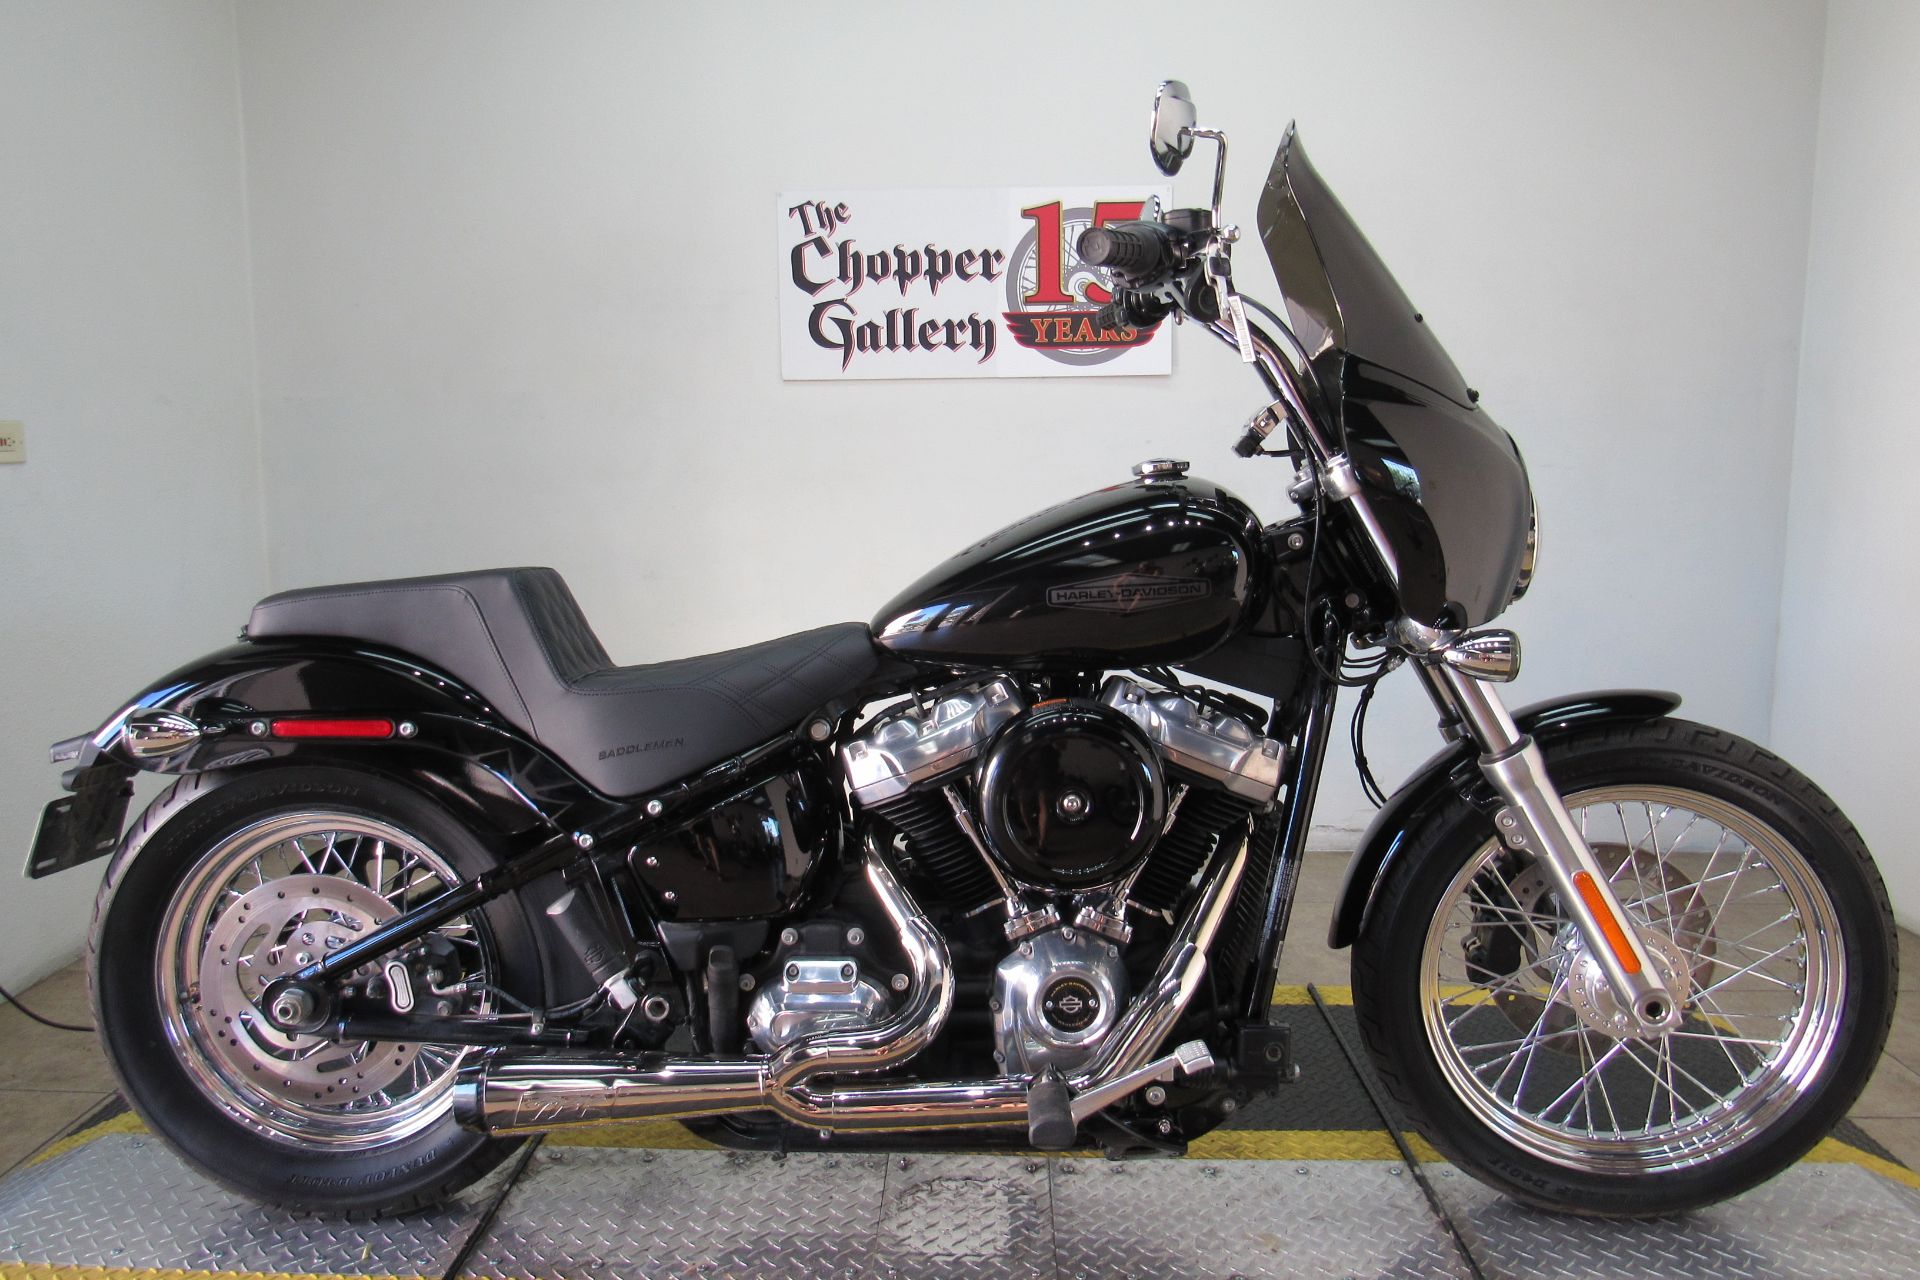 2020 Harley-Davidson Softail® Standard in Temecula, California - Photo 1